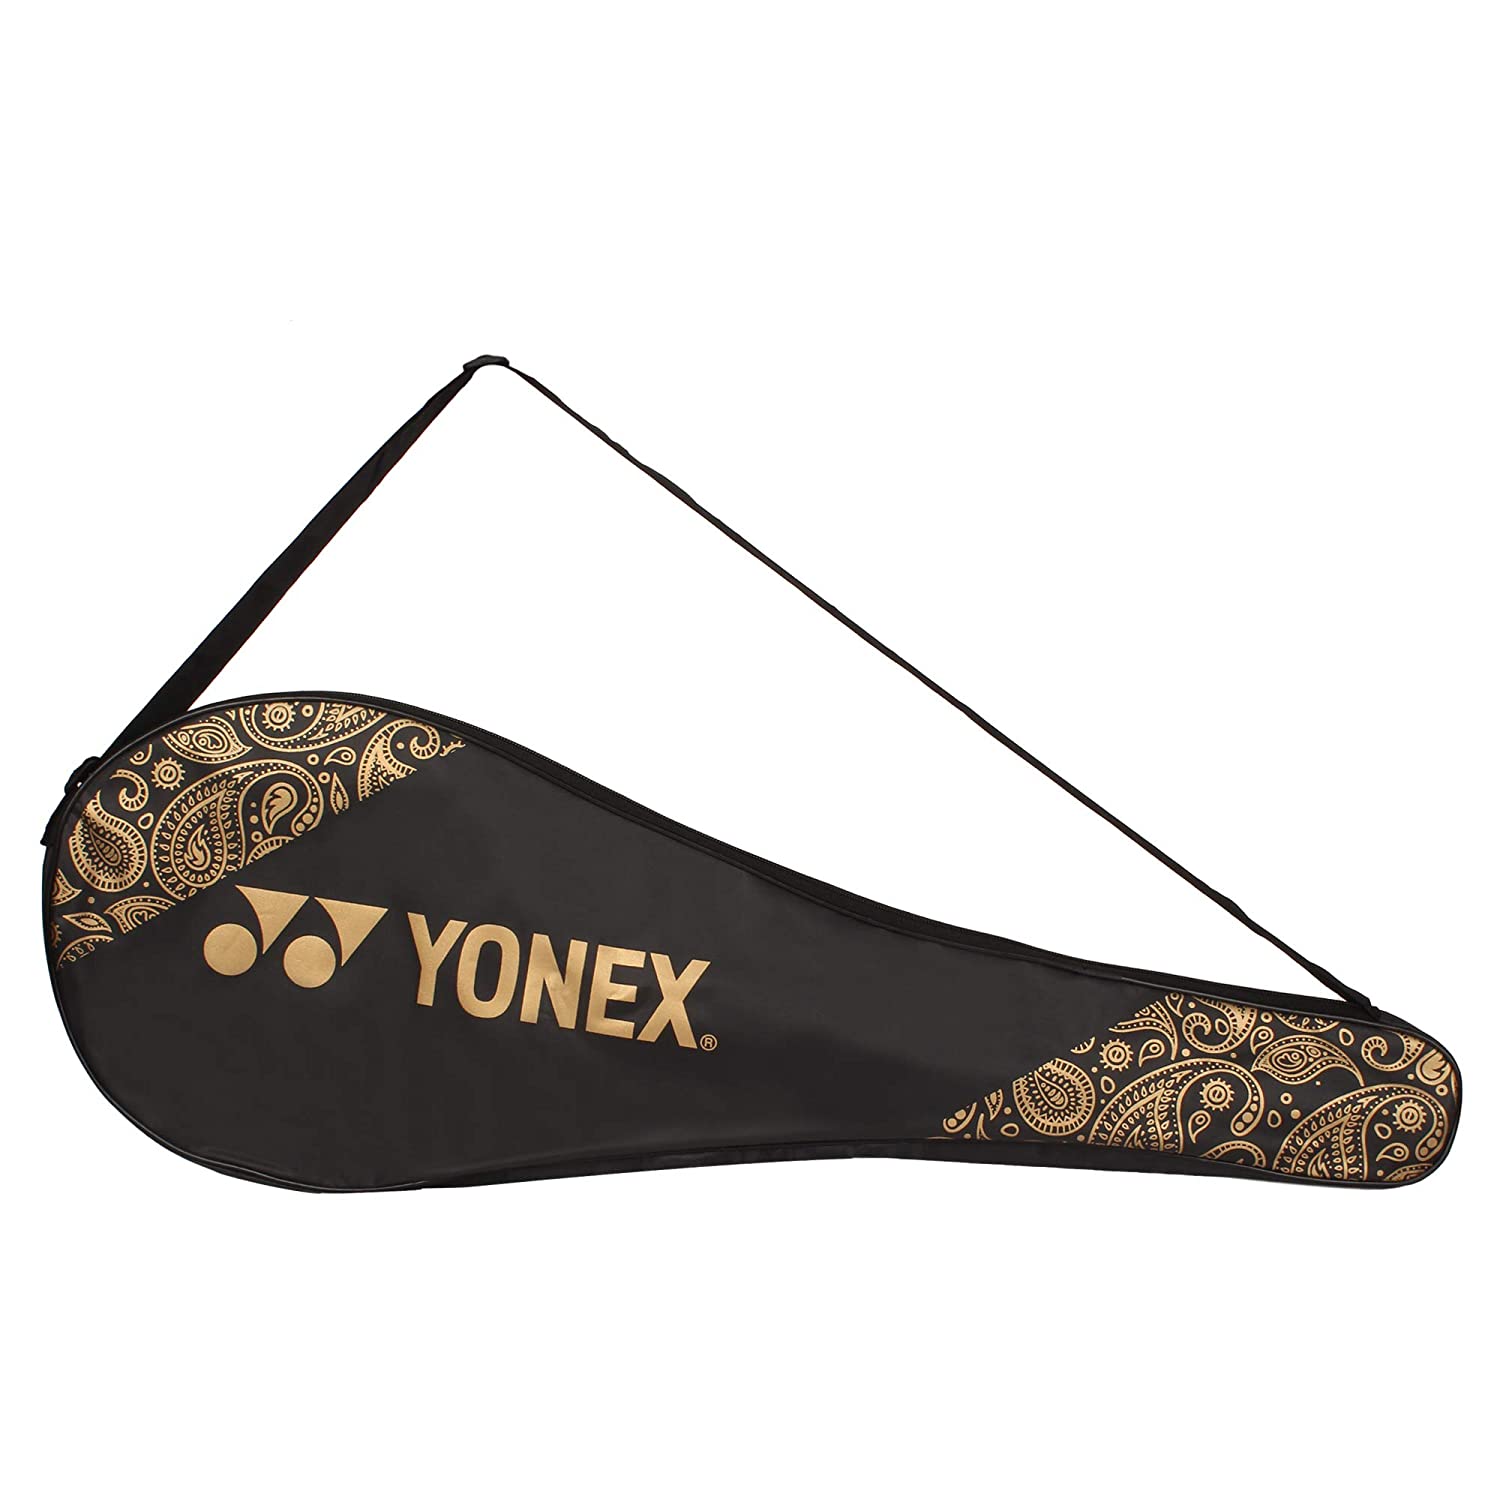 Yonex ZR 111 Light Aluminium Badminton Racquet with Full Cover, Orange - Best Price online Prokicksports.com